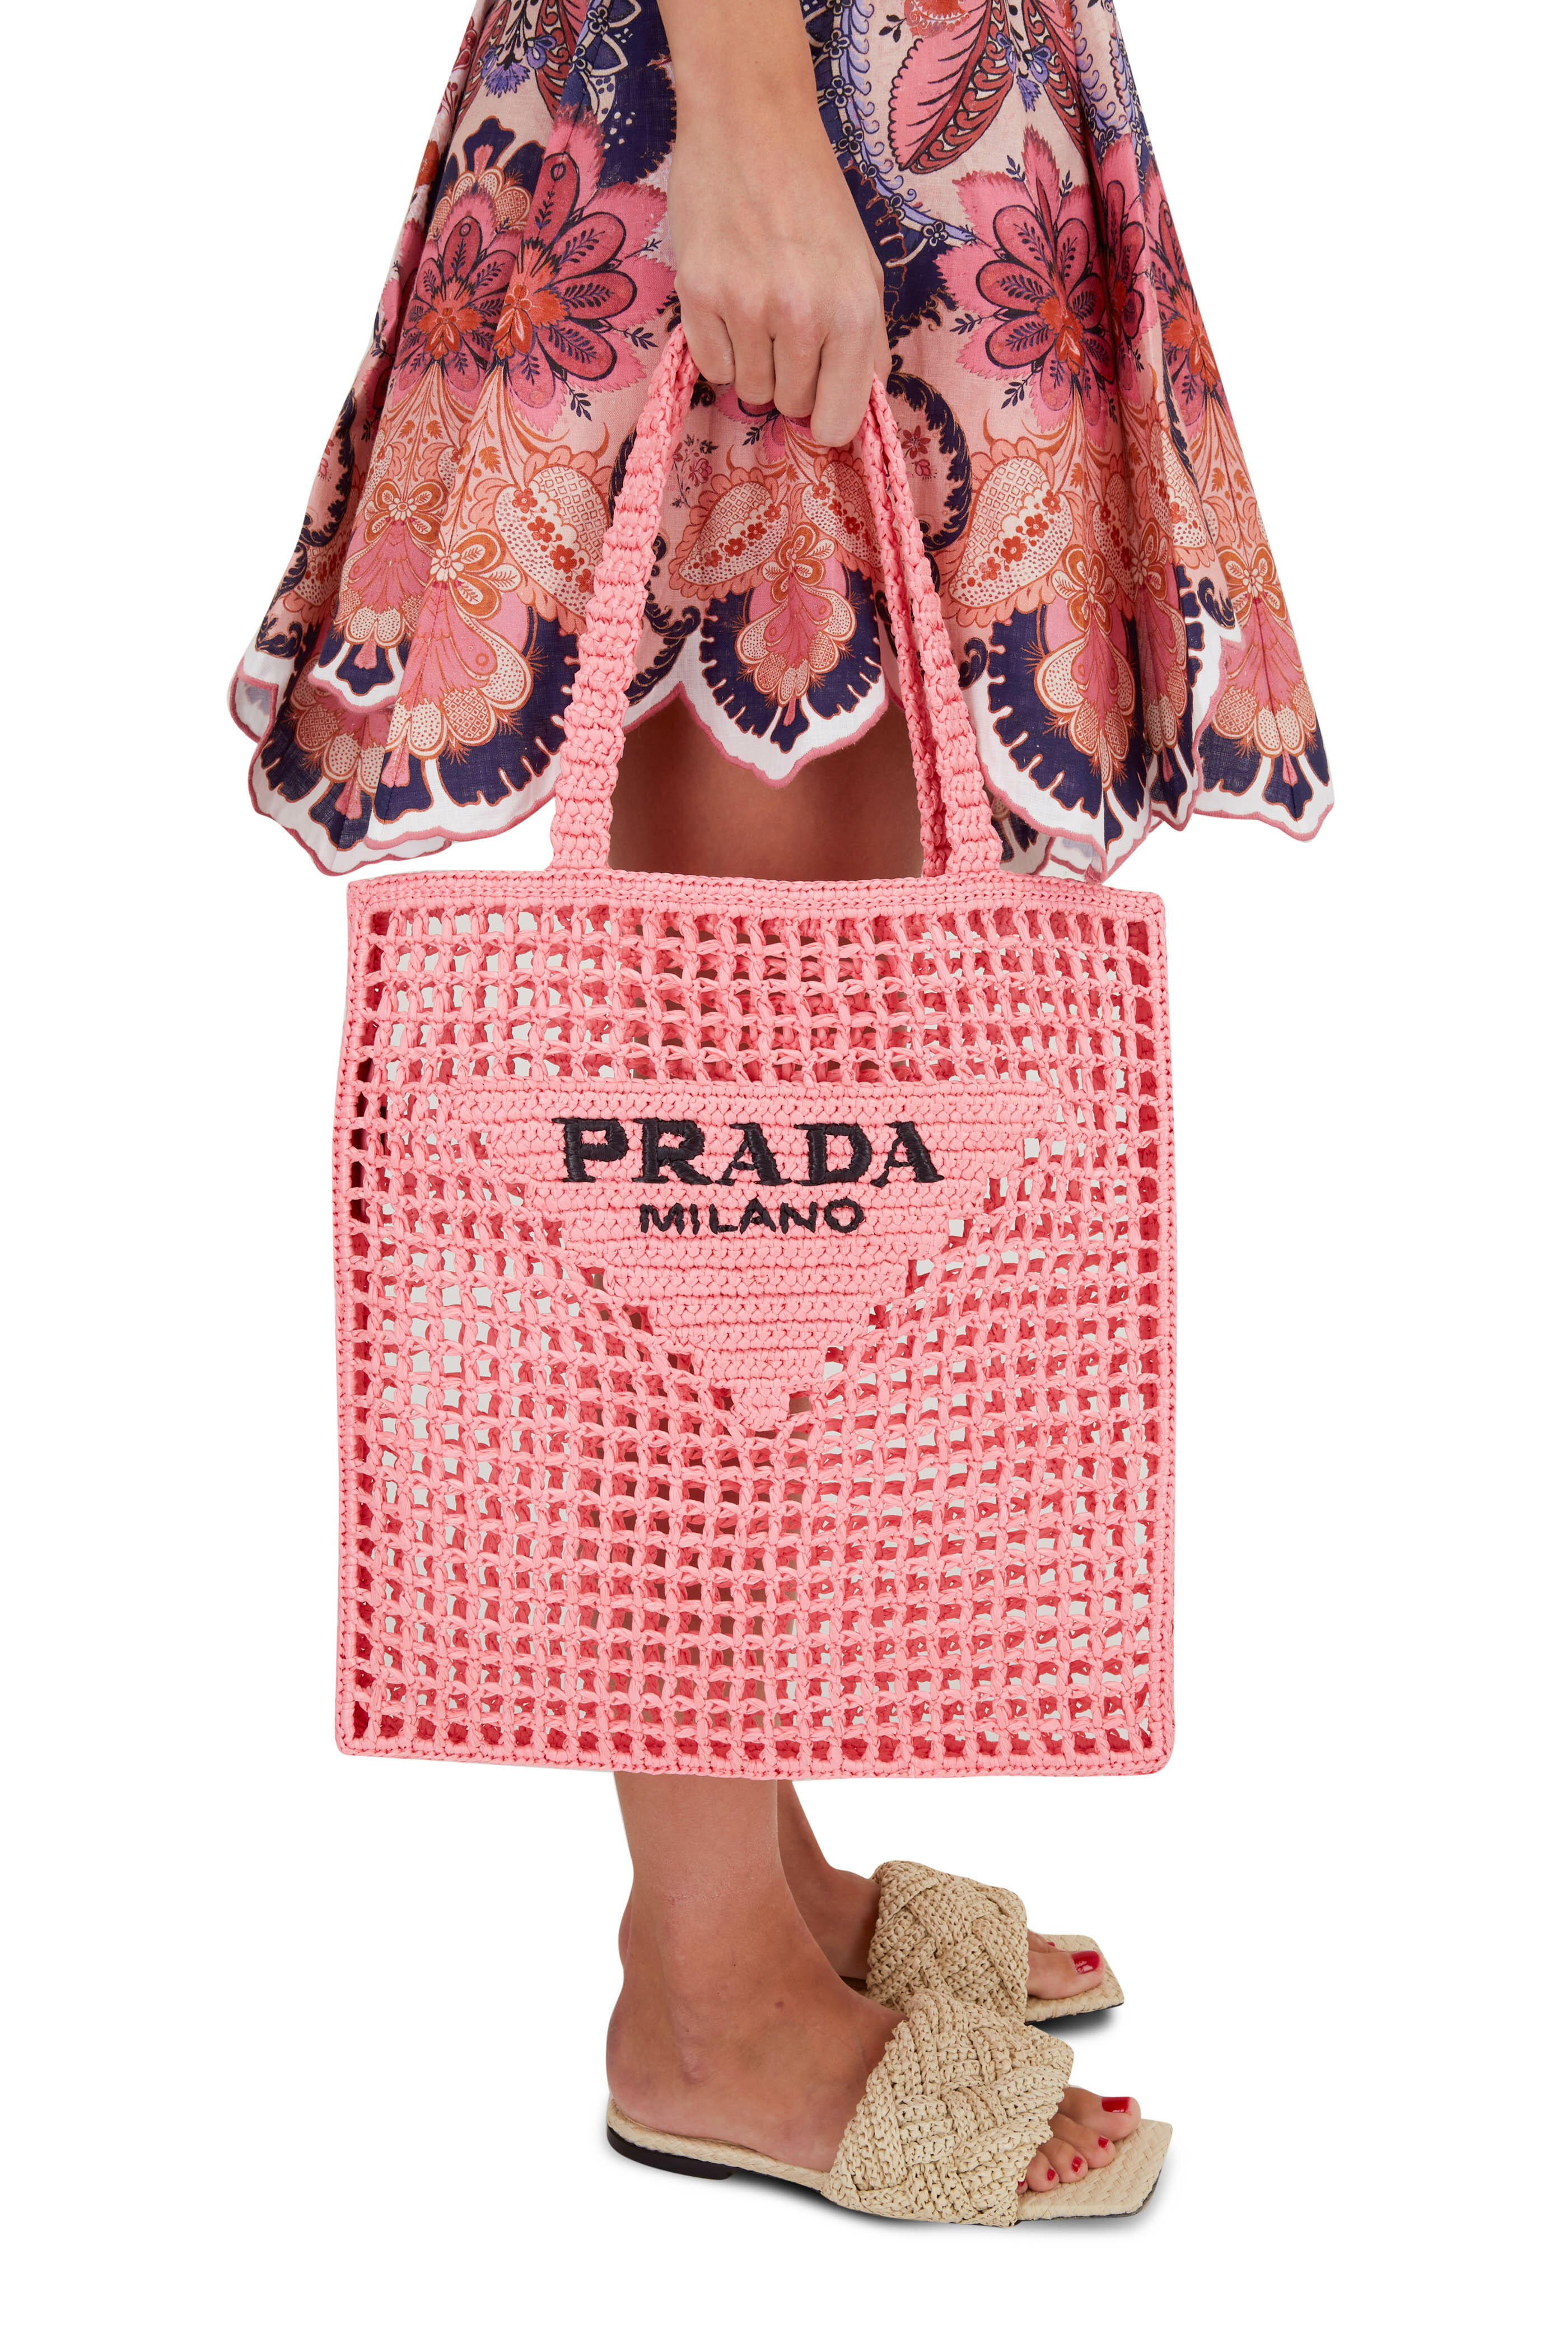 Prada triangle-logo Crochet Rafia Tote Bag - Farfetch